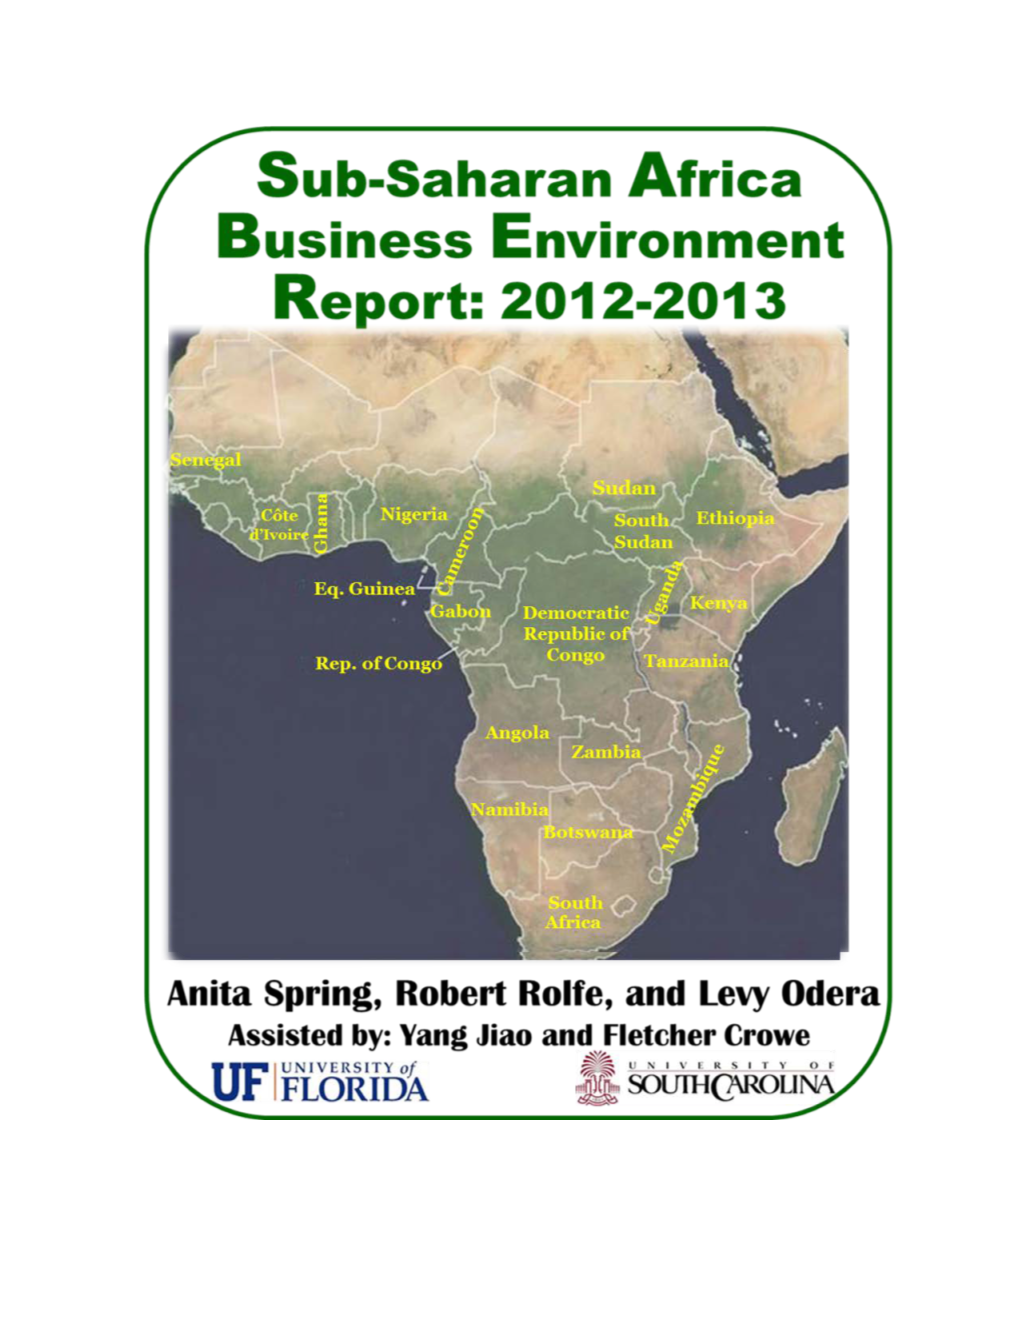 Sub-Saharan Business Environment Report 2012-2013